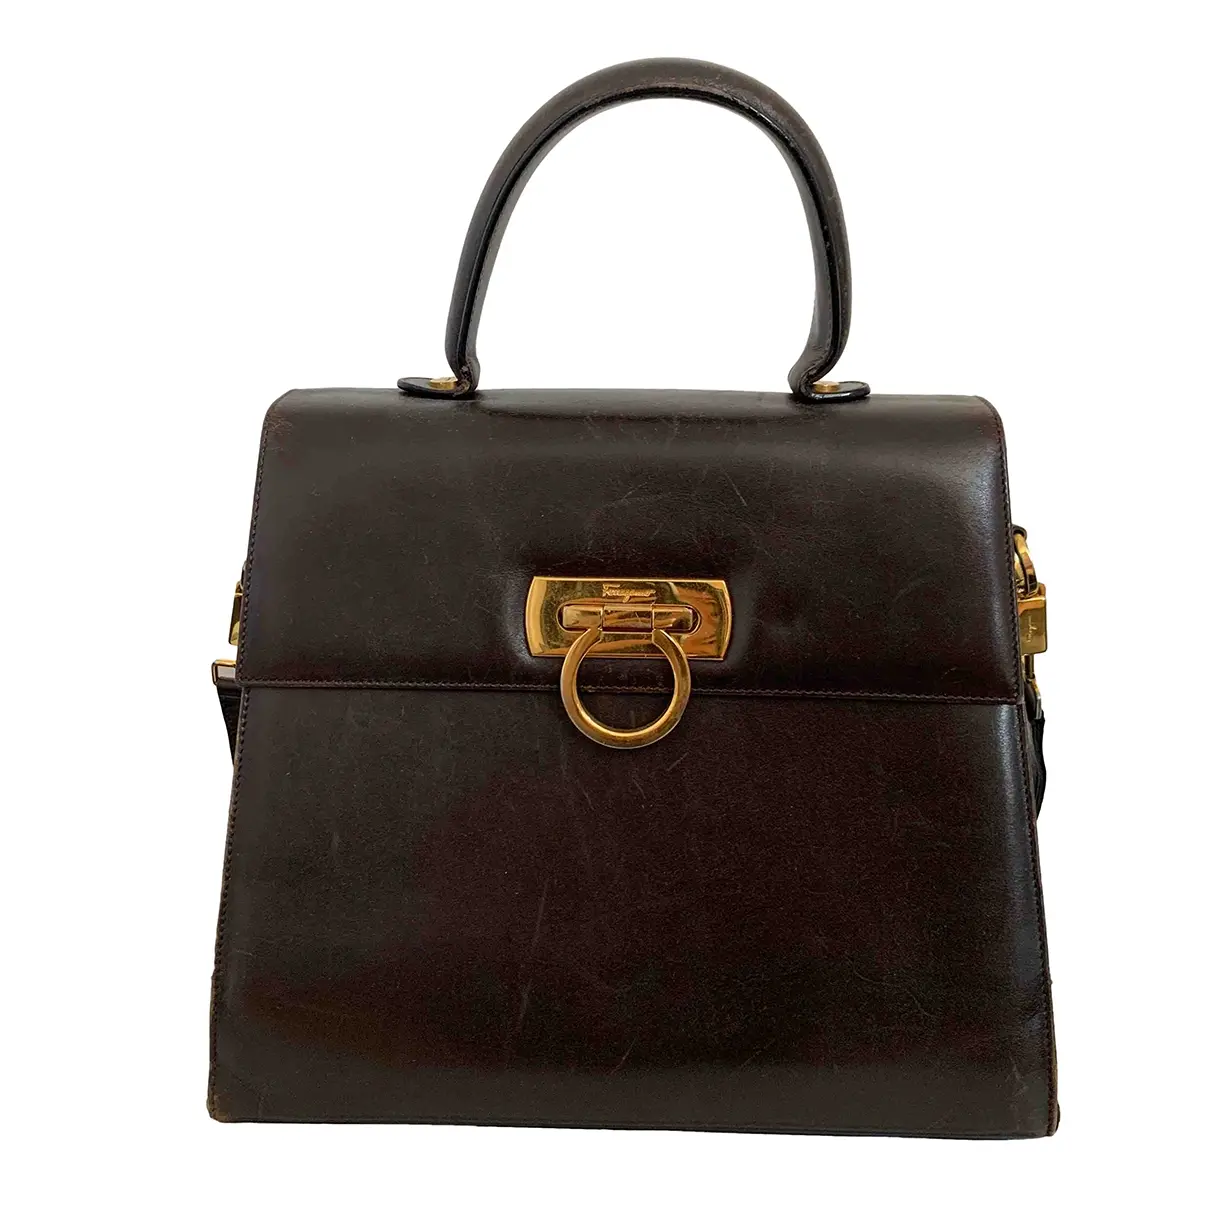 Leather handbag Salvatore Ferragamo - Vintage